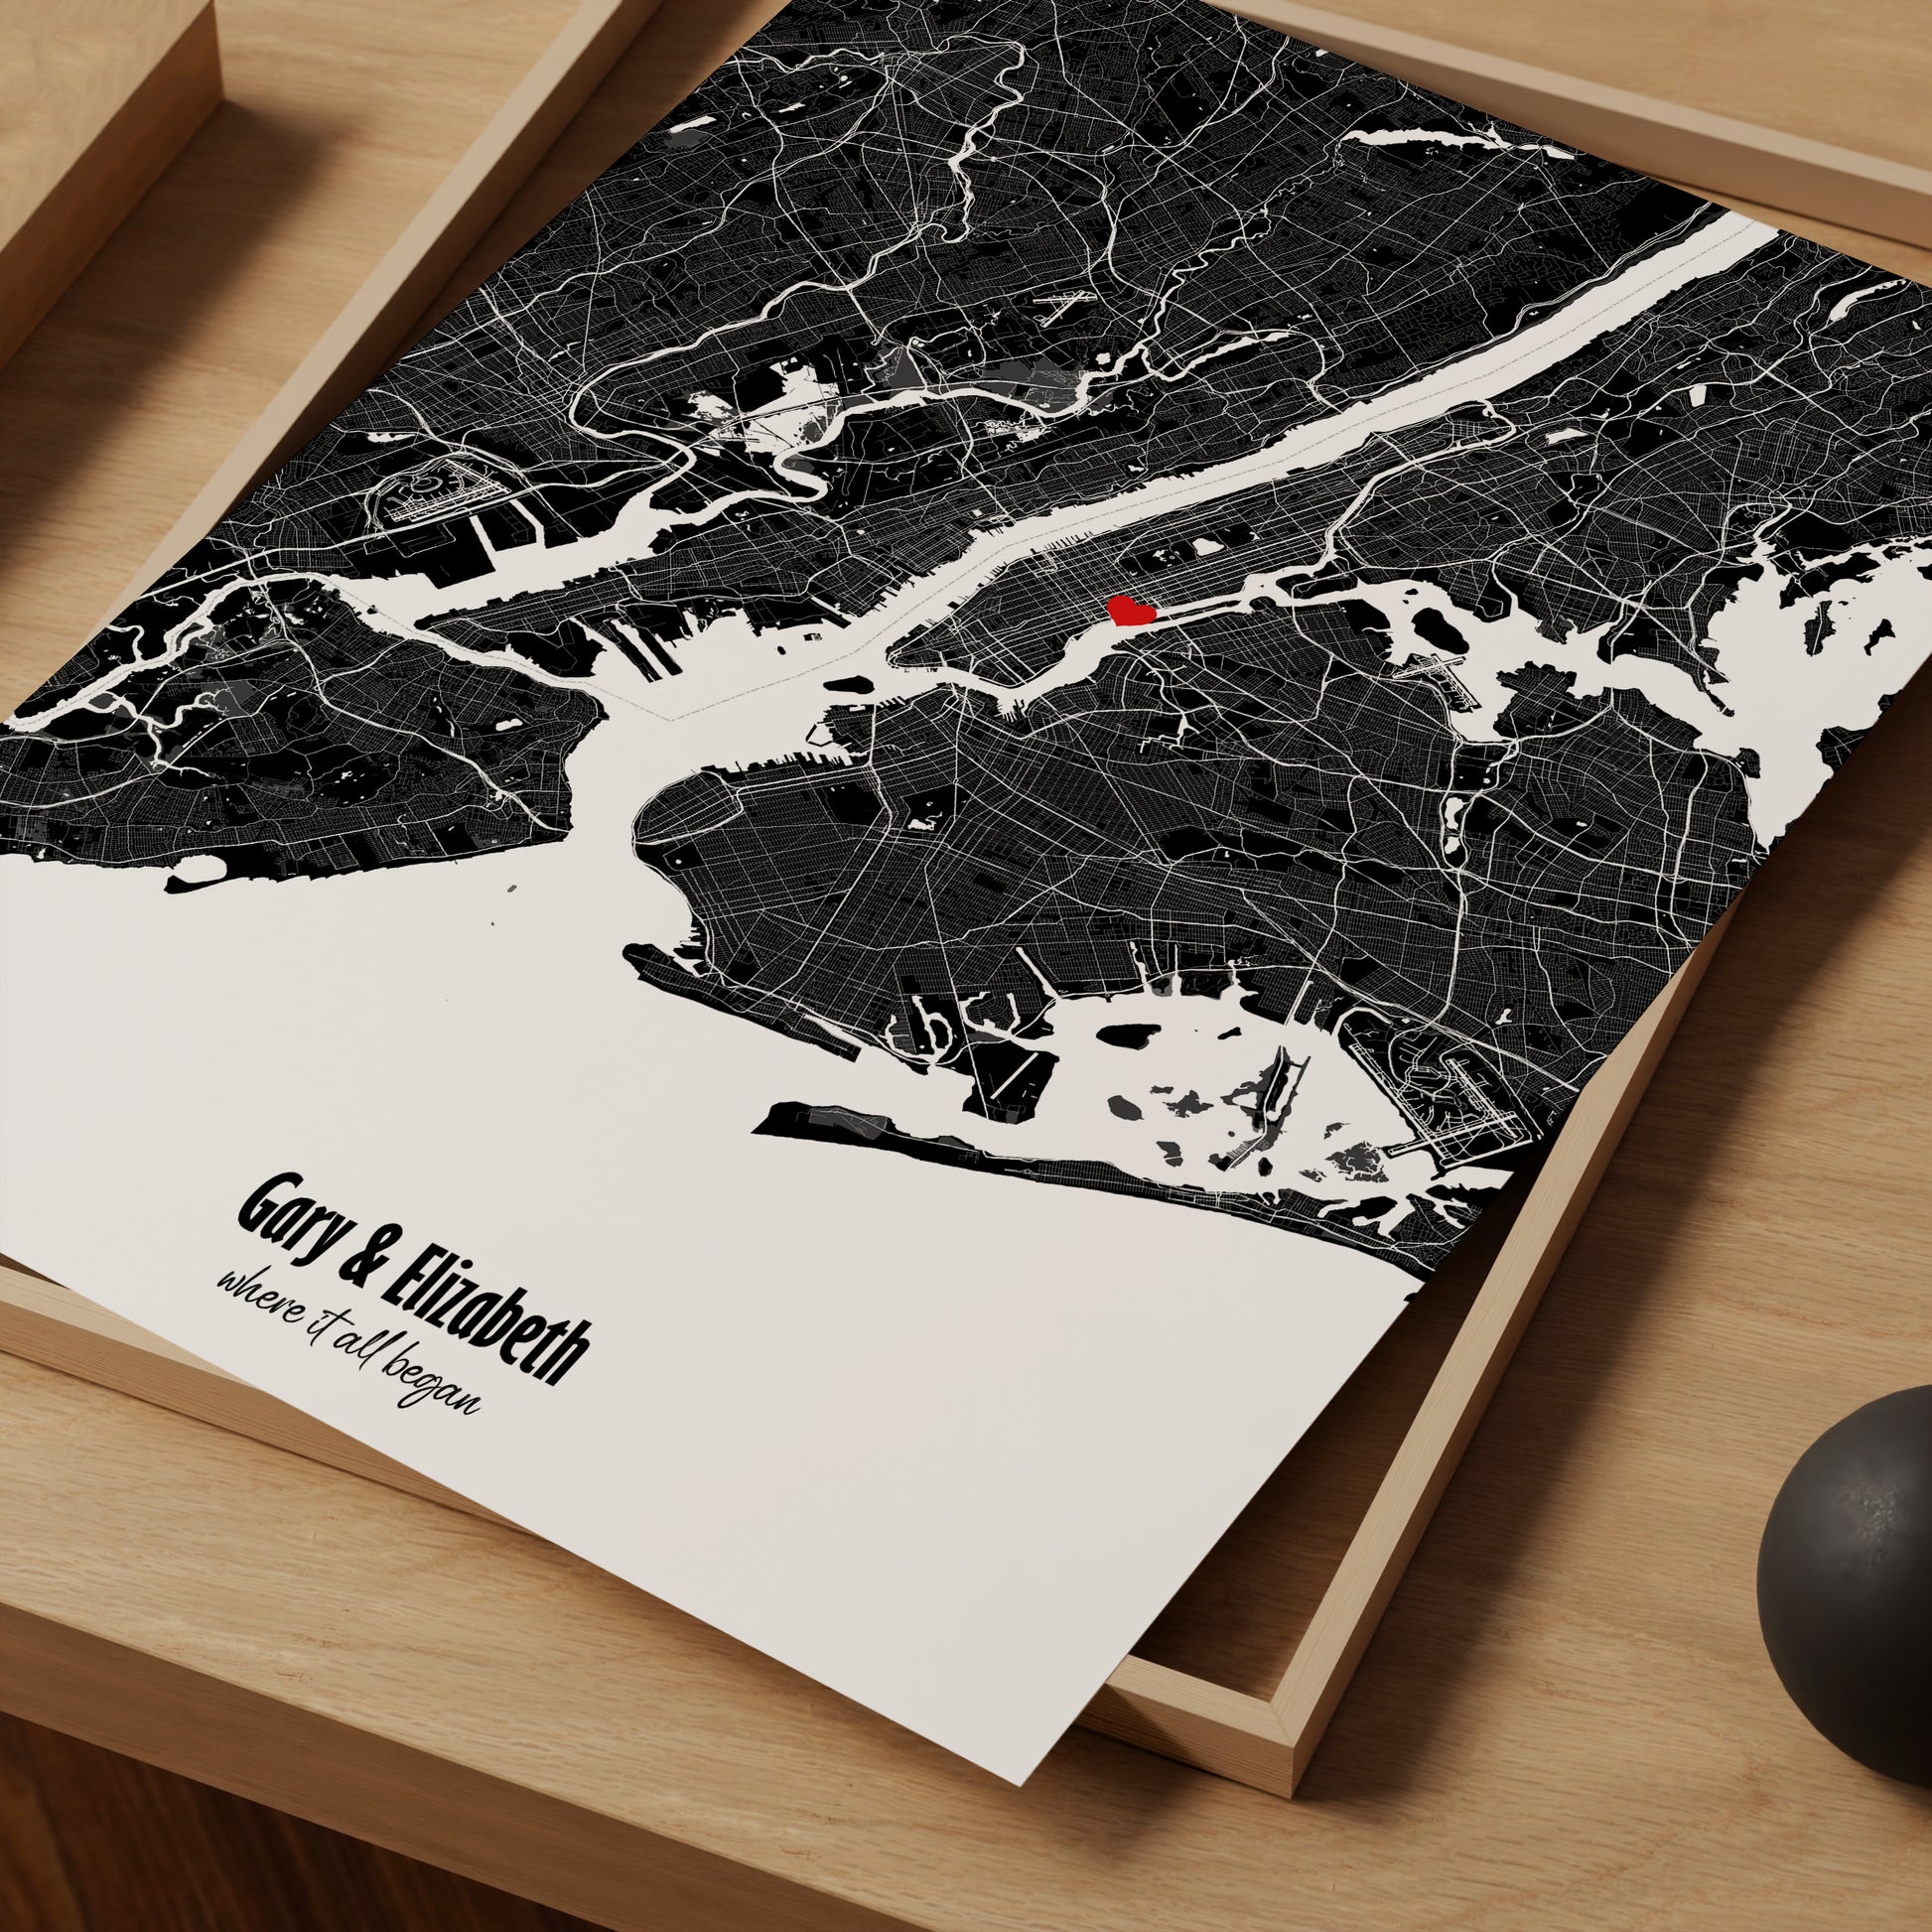 Personalised Mono City Map Print - Magic Posters